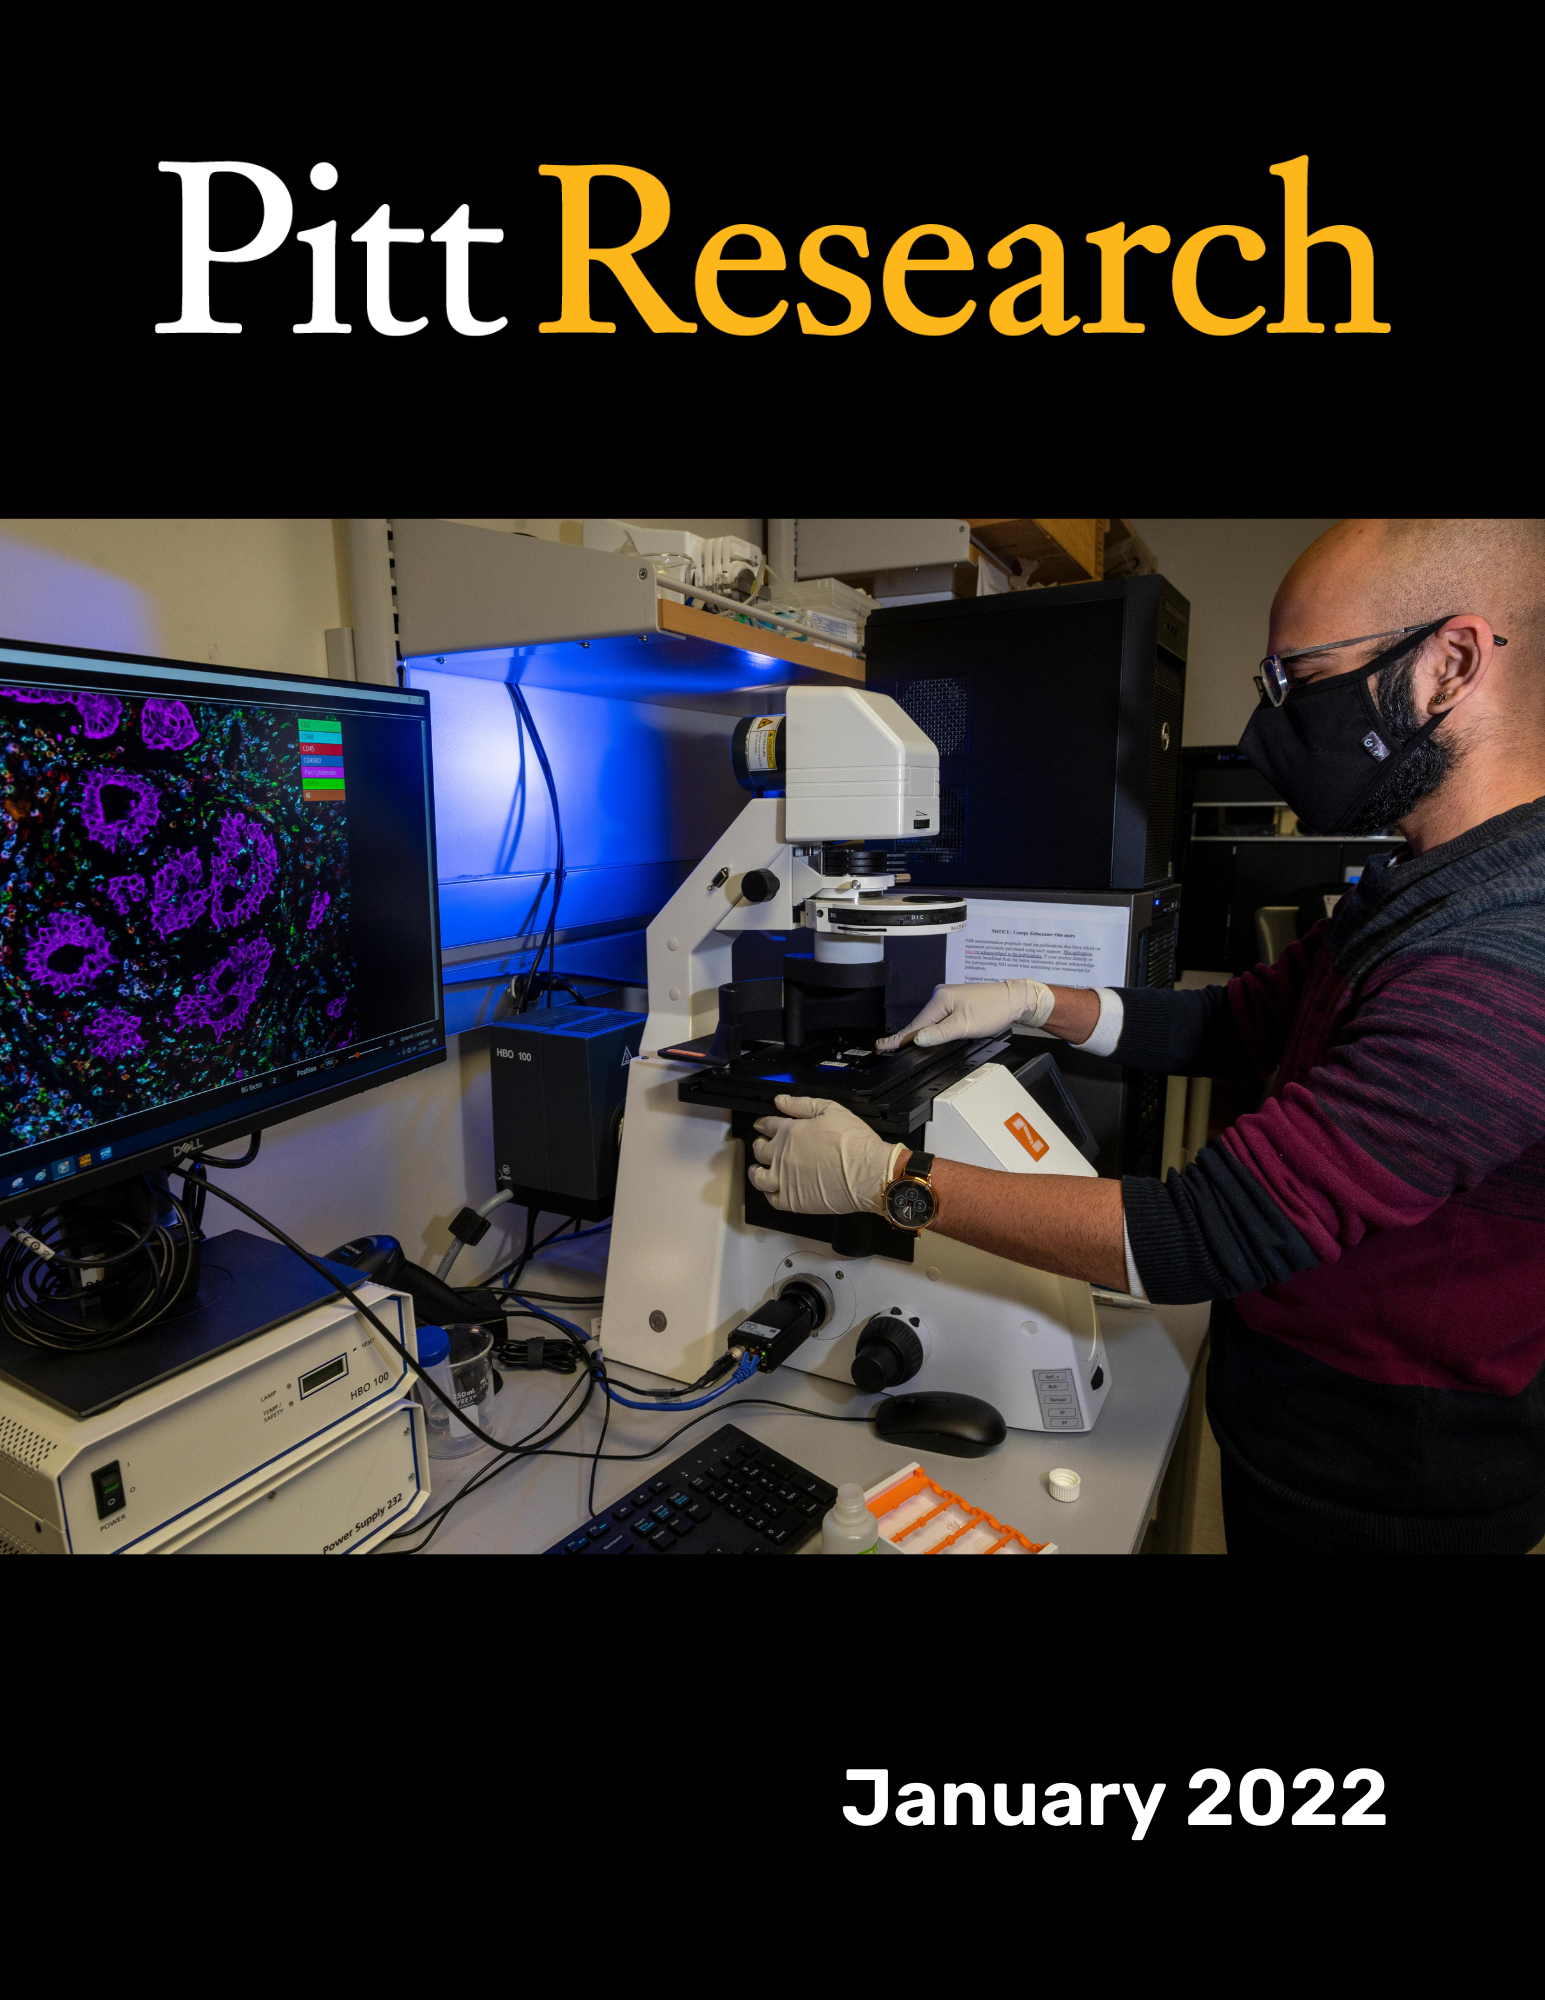 Pitt Research Newsletter for January 2022